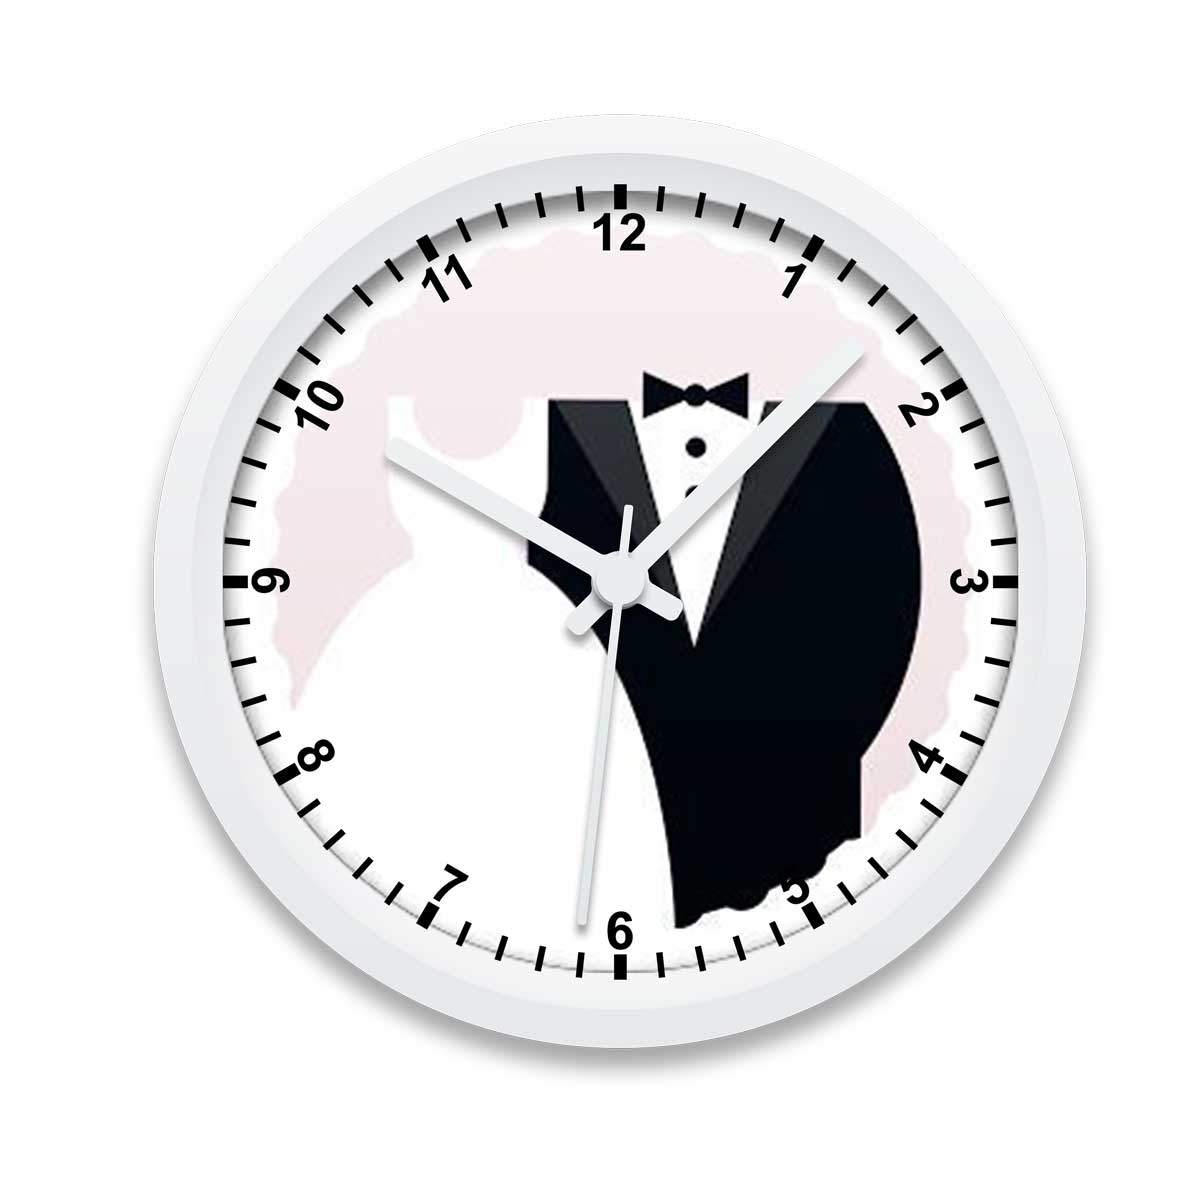 Personalized Wall Clocks for Weddings, Black White | Zazzle | Personalized wall  clock, Wall clock, Clock